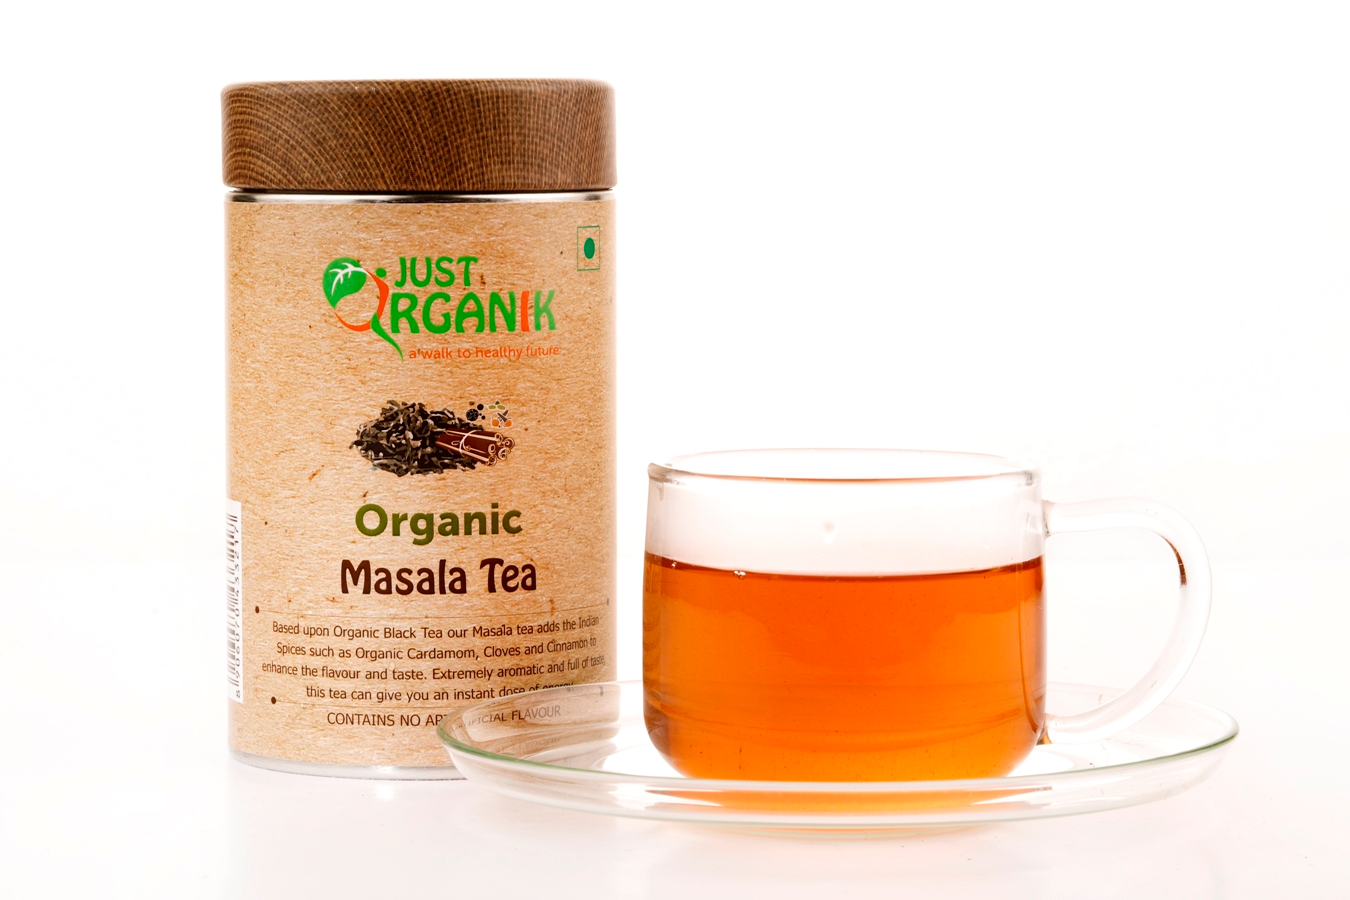 Just Organik Organic Masala Tea 75g